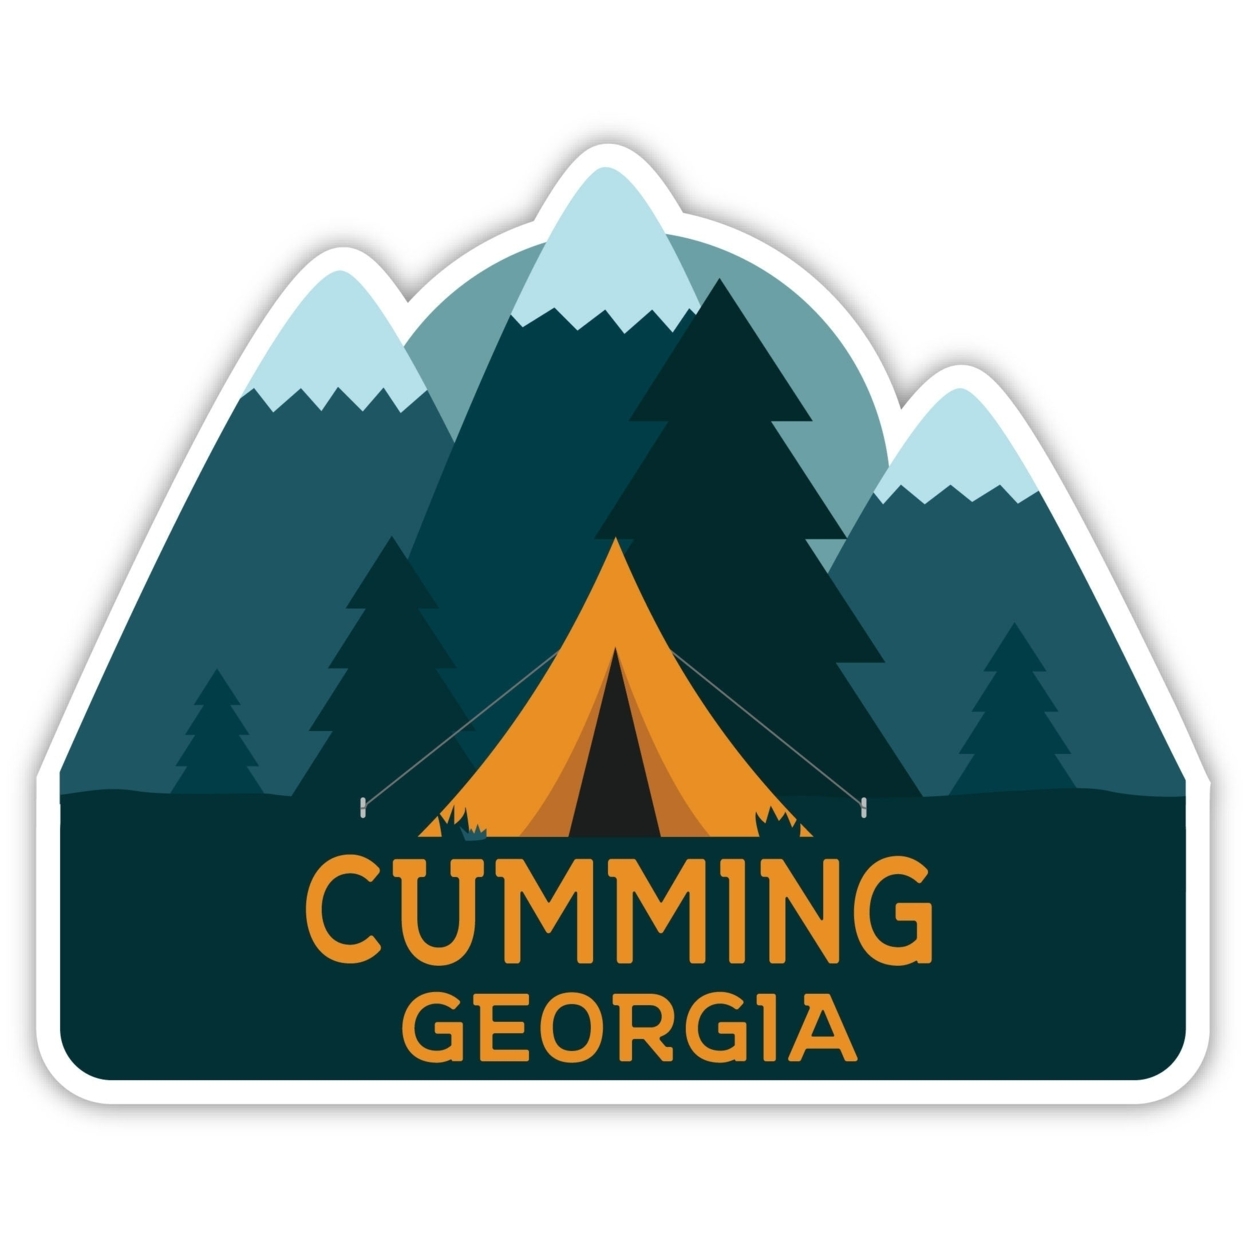 Cumming Georgia Souvenir Decorative Stickers (Choose Theme And Size) - 4-Pack, 10-Inch, Tent